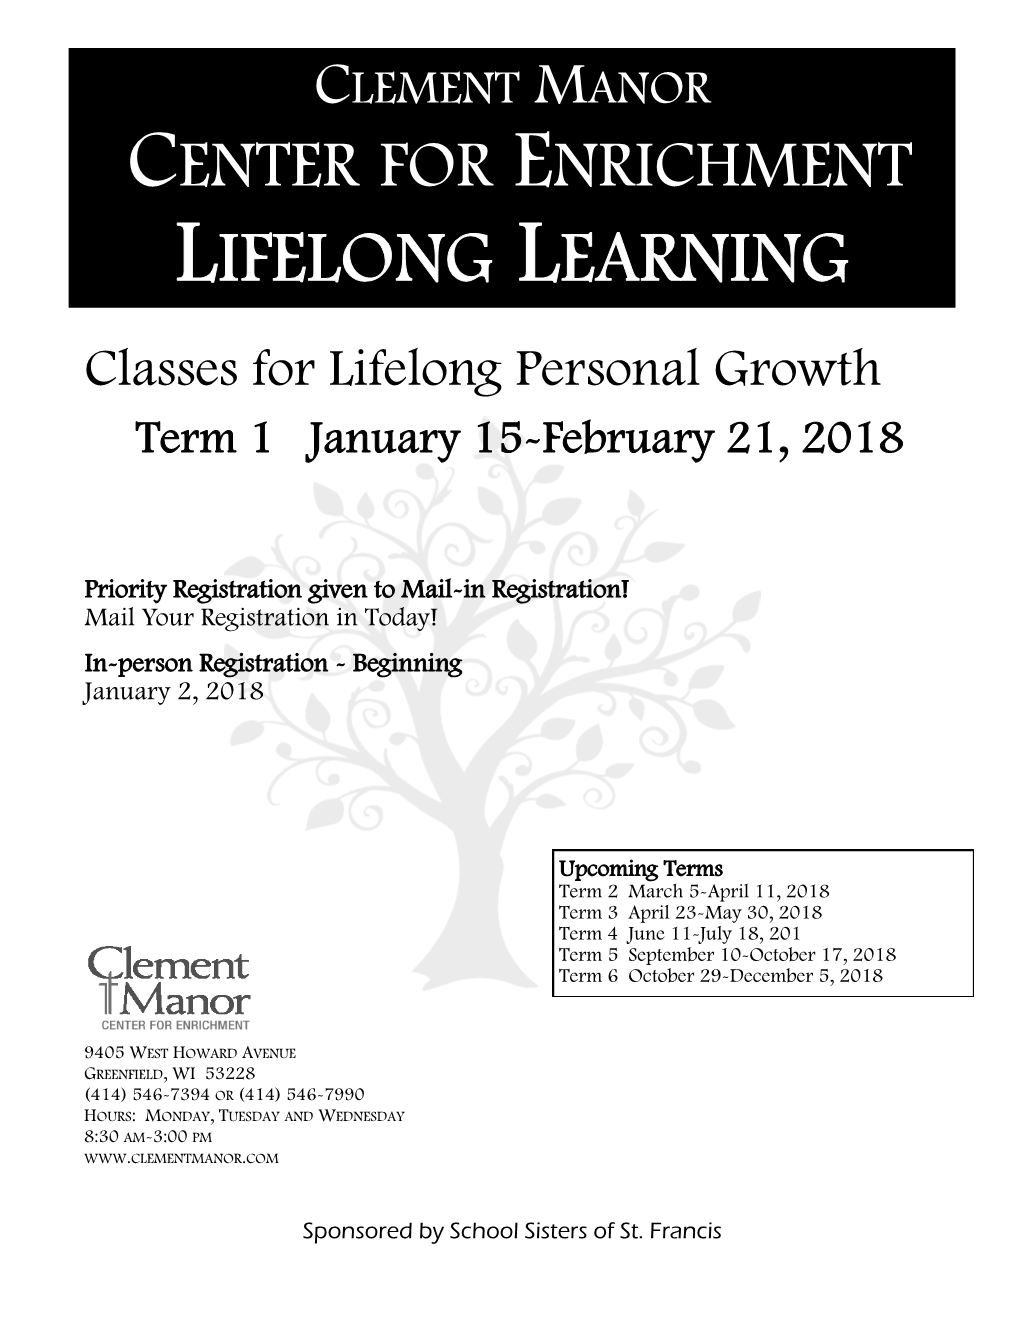 LIFELONG LEARNING LIFELONG LEARNING Classes for Lifelong Personal Growth Term 1 January 15-February 21, 2018